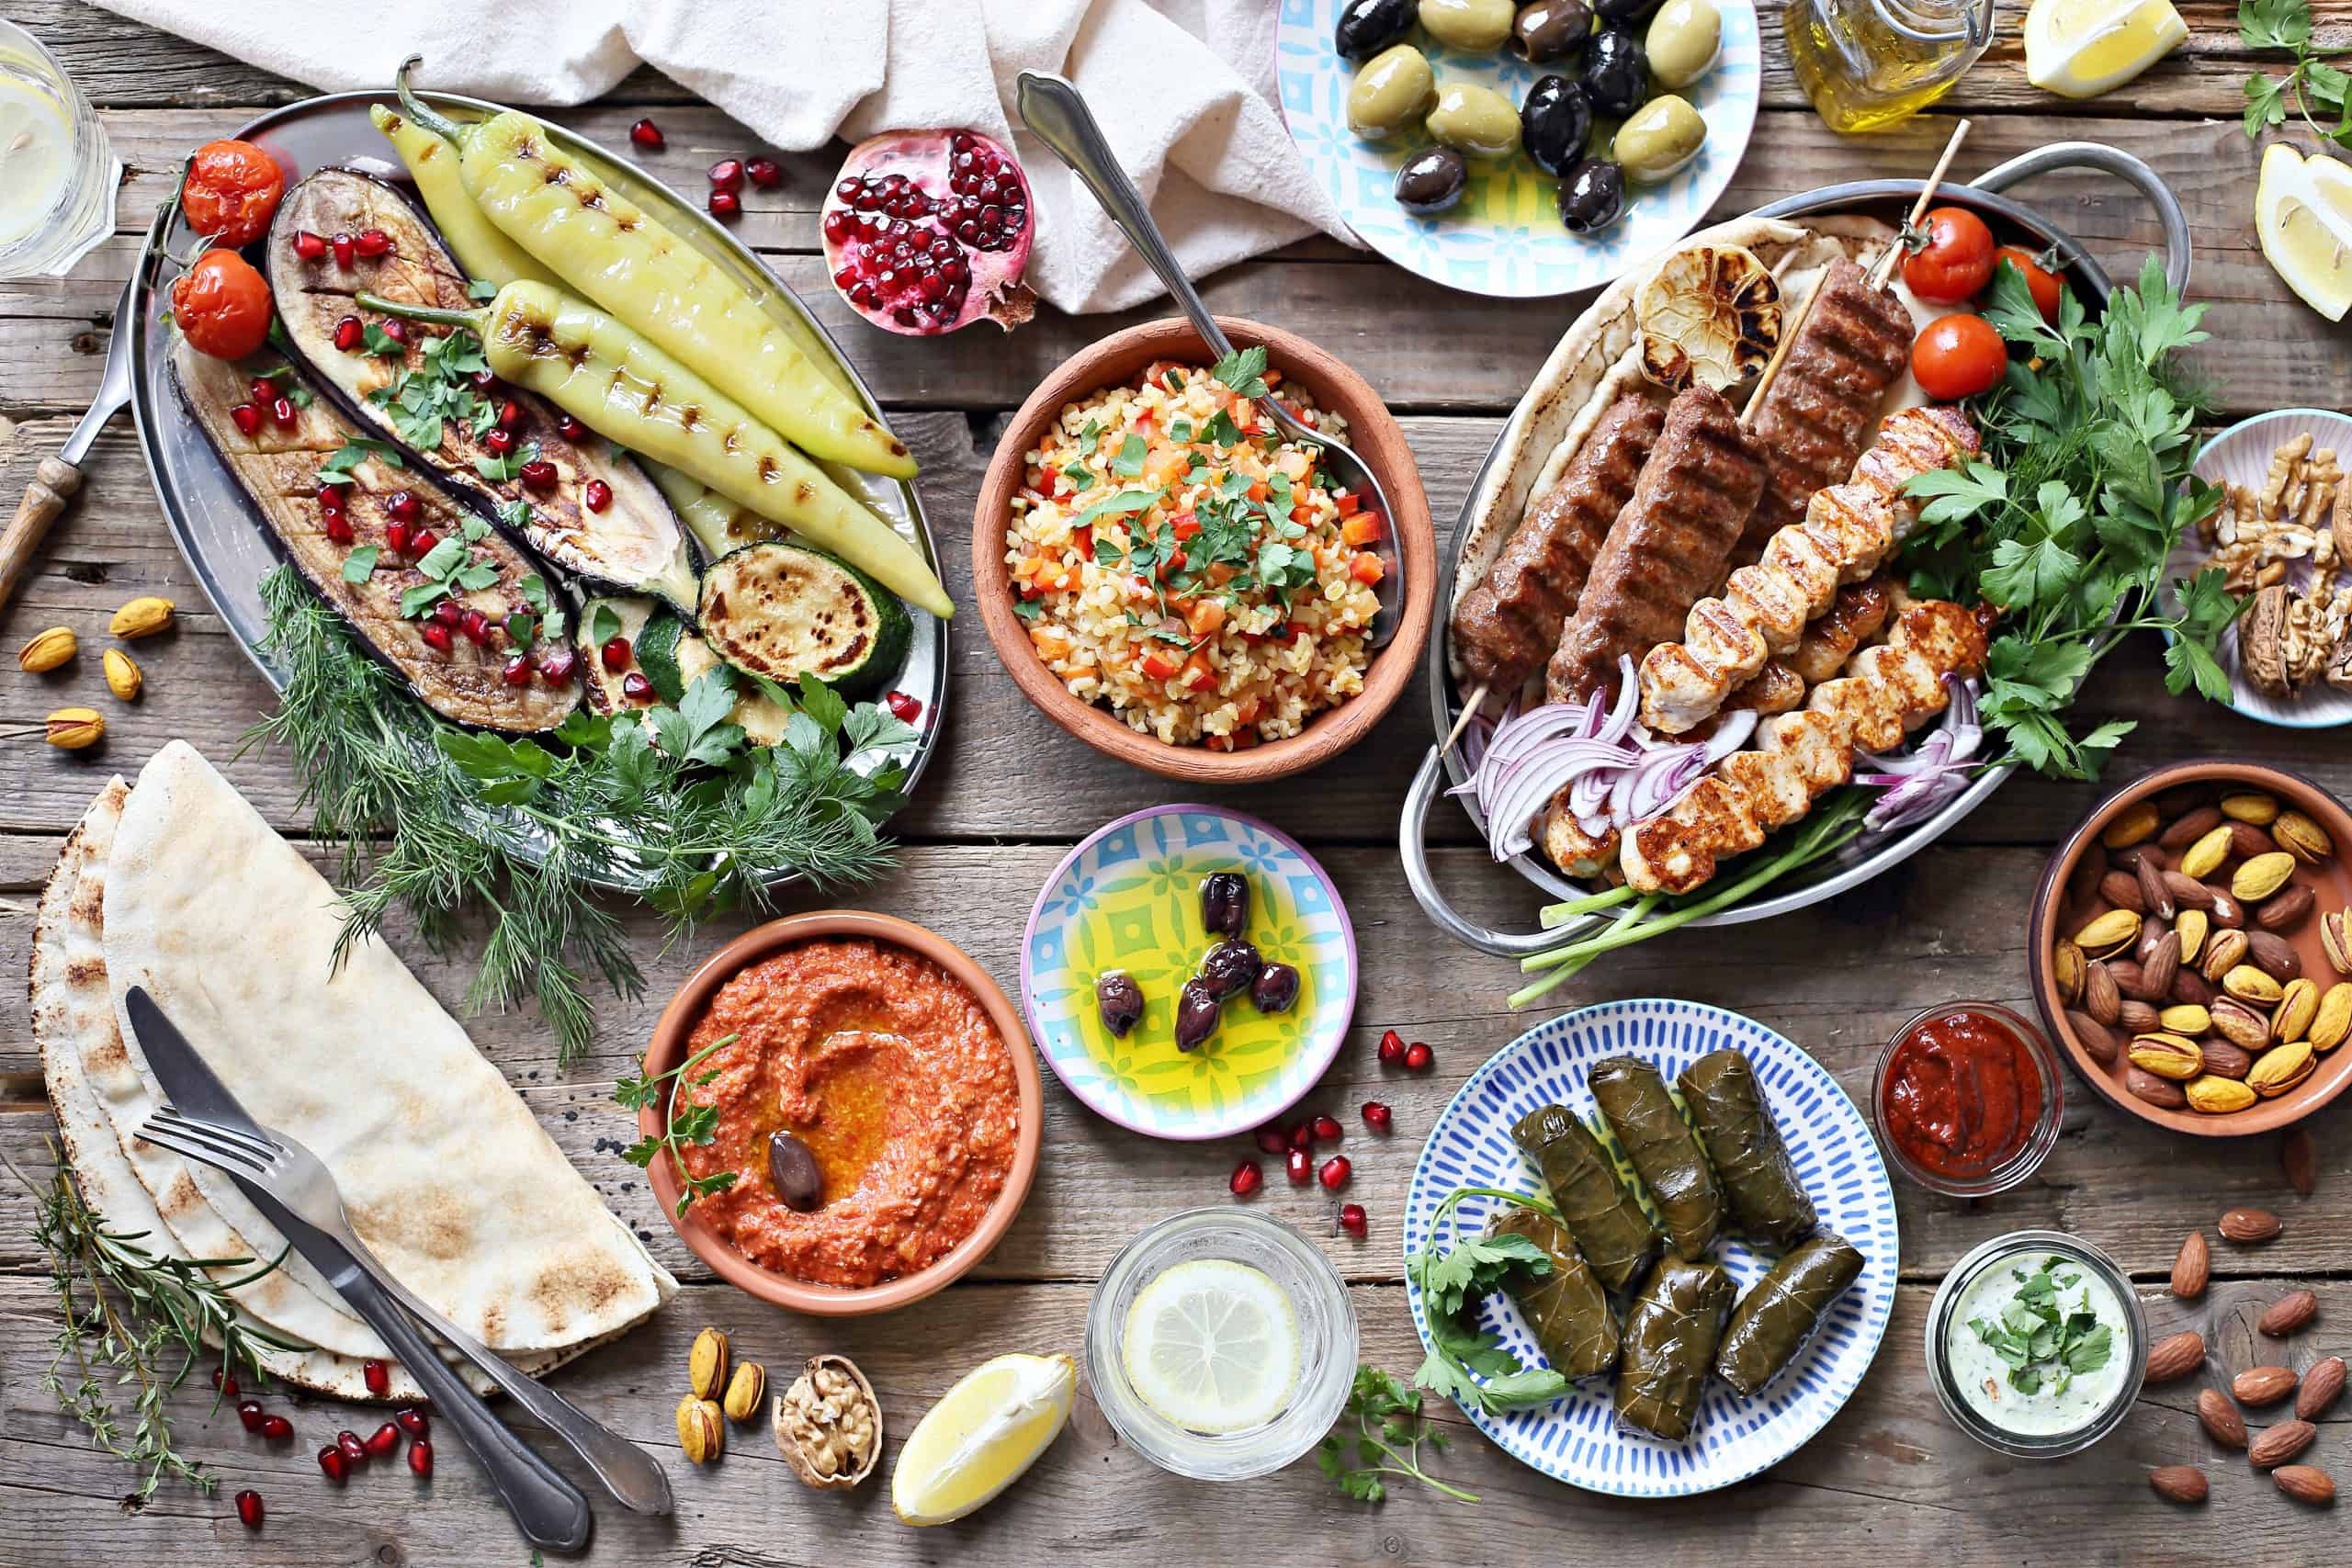 istanbul un en lezzetli yoresel restoranlari obilet com blog